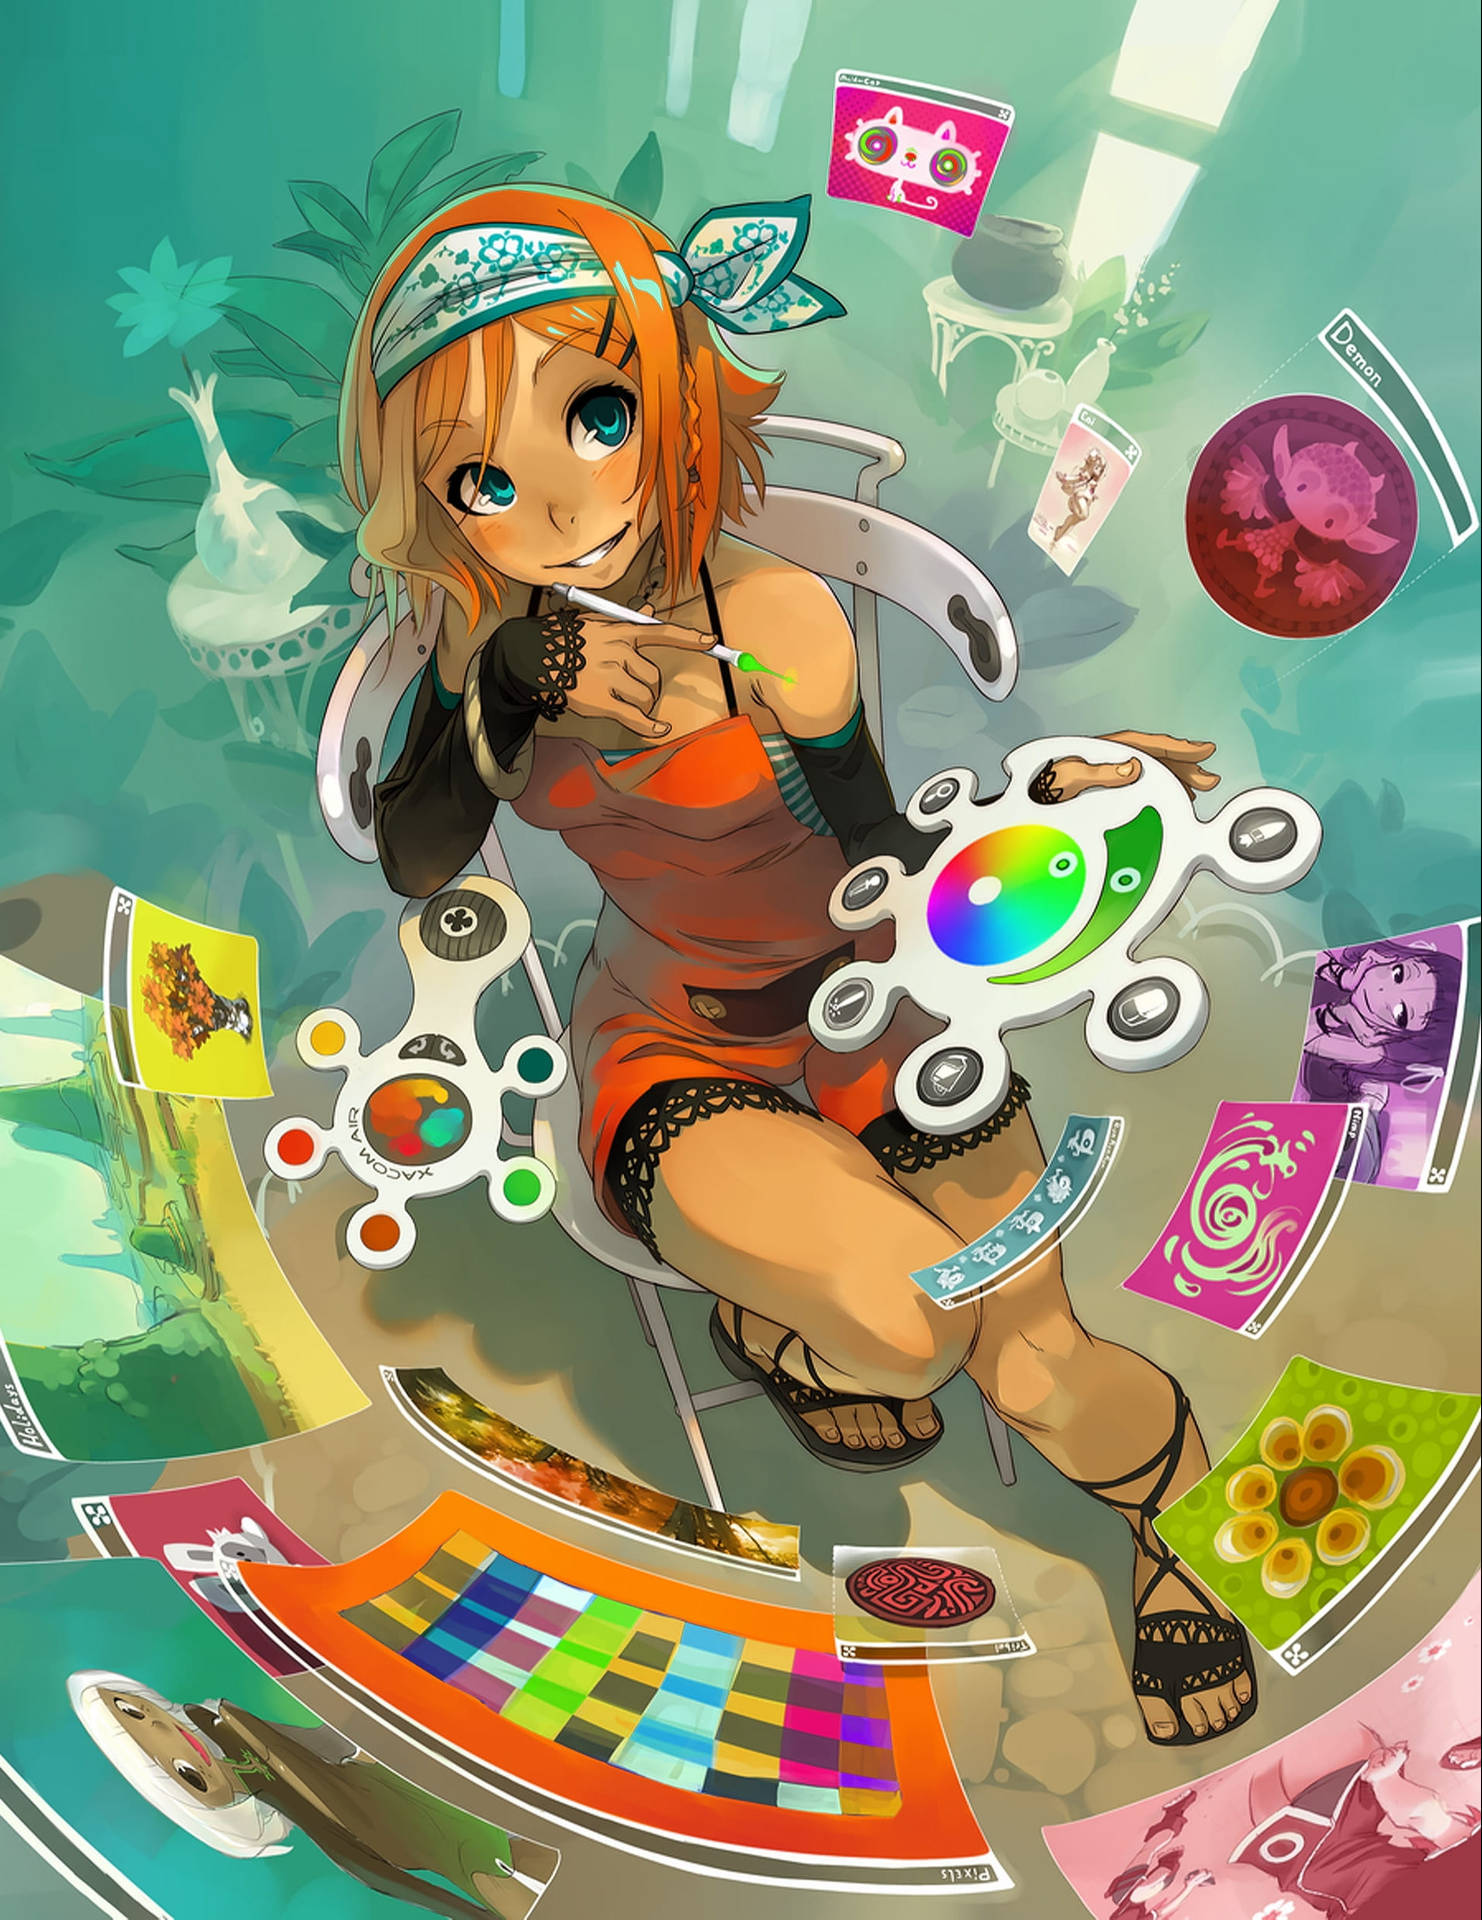 Sexy Anime Girl Digital Art Wallpaper